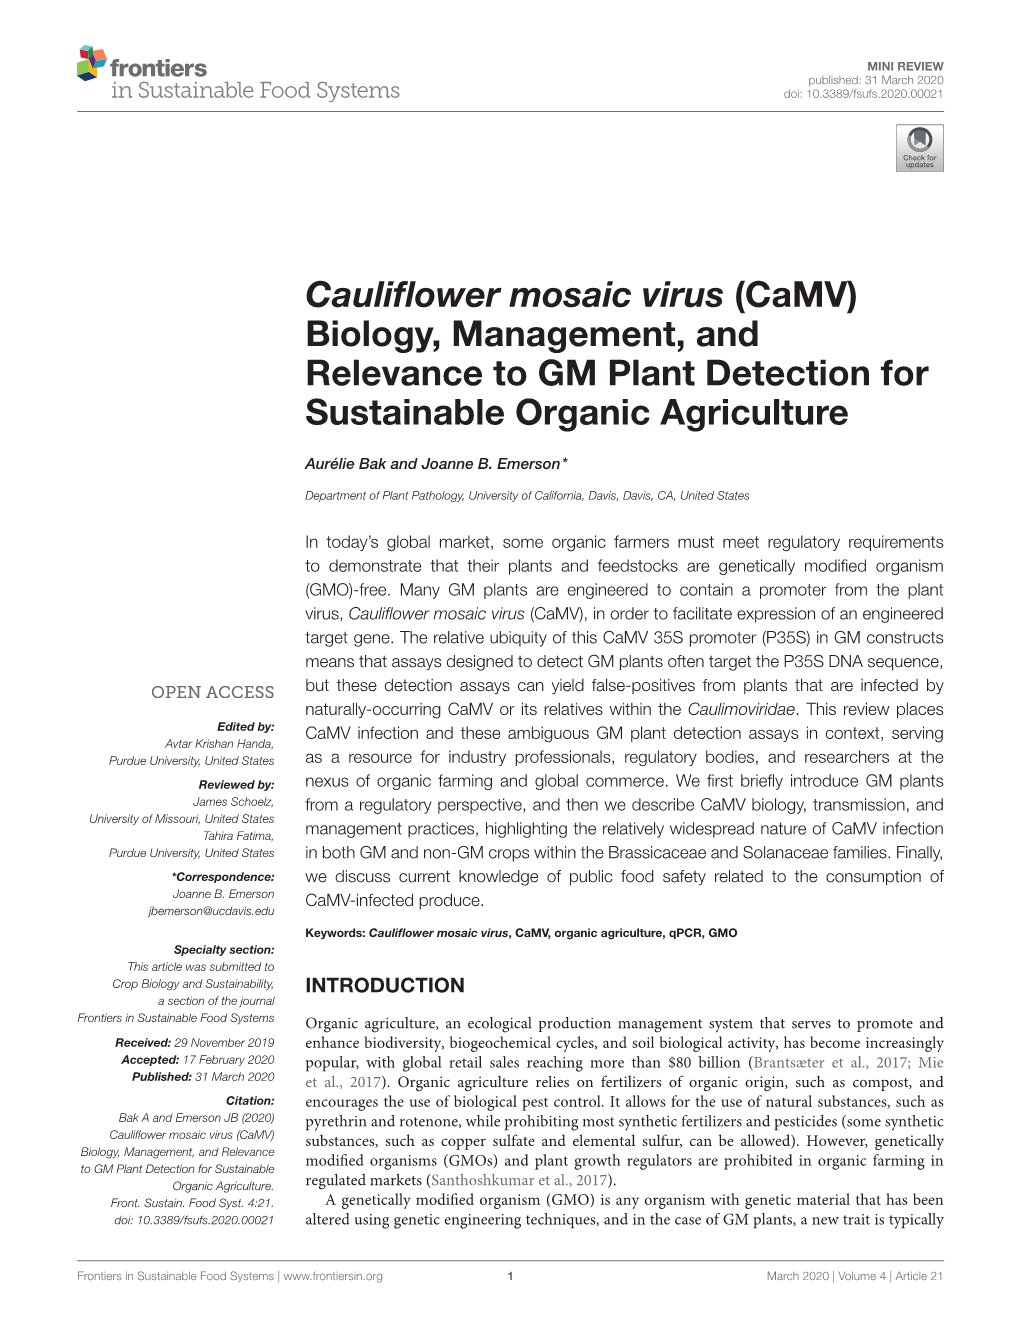 Cauliflower Mosaic Virus (Camv) Biology, Management, And